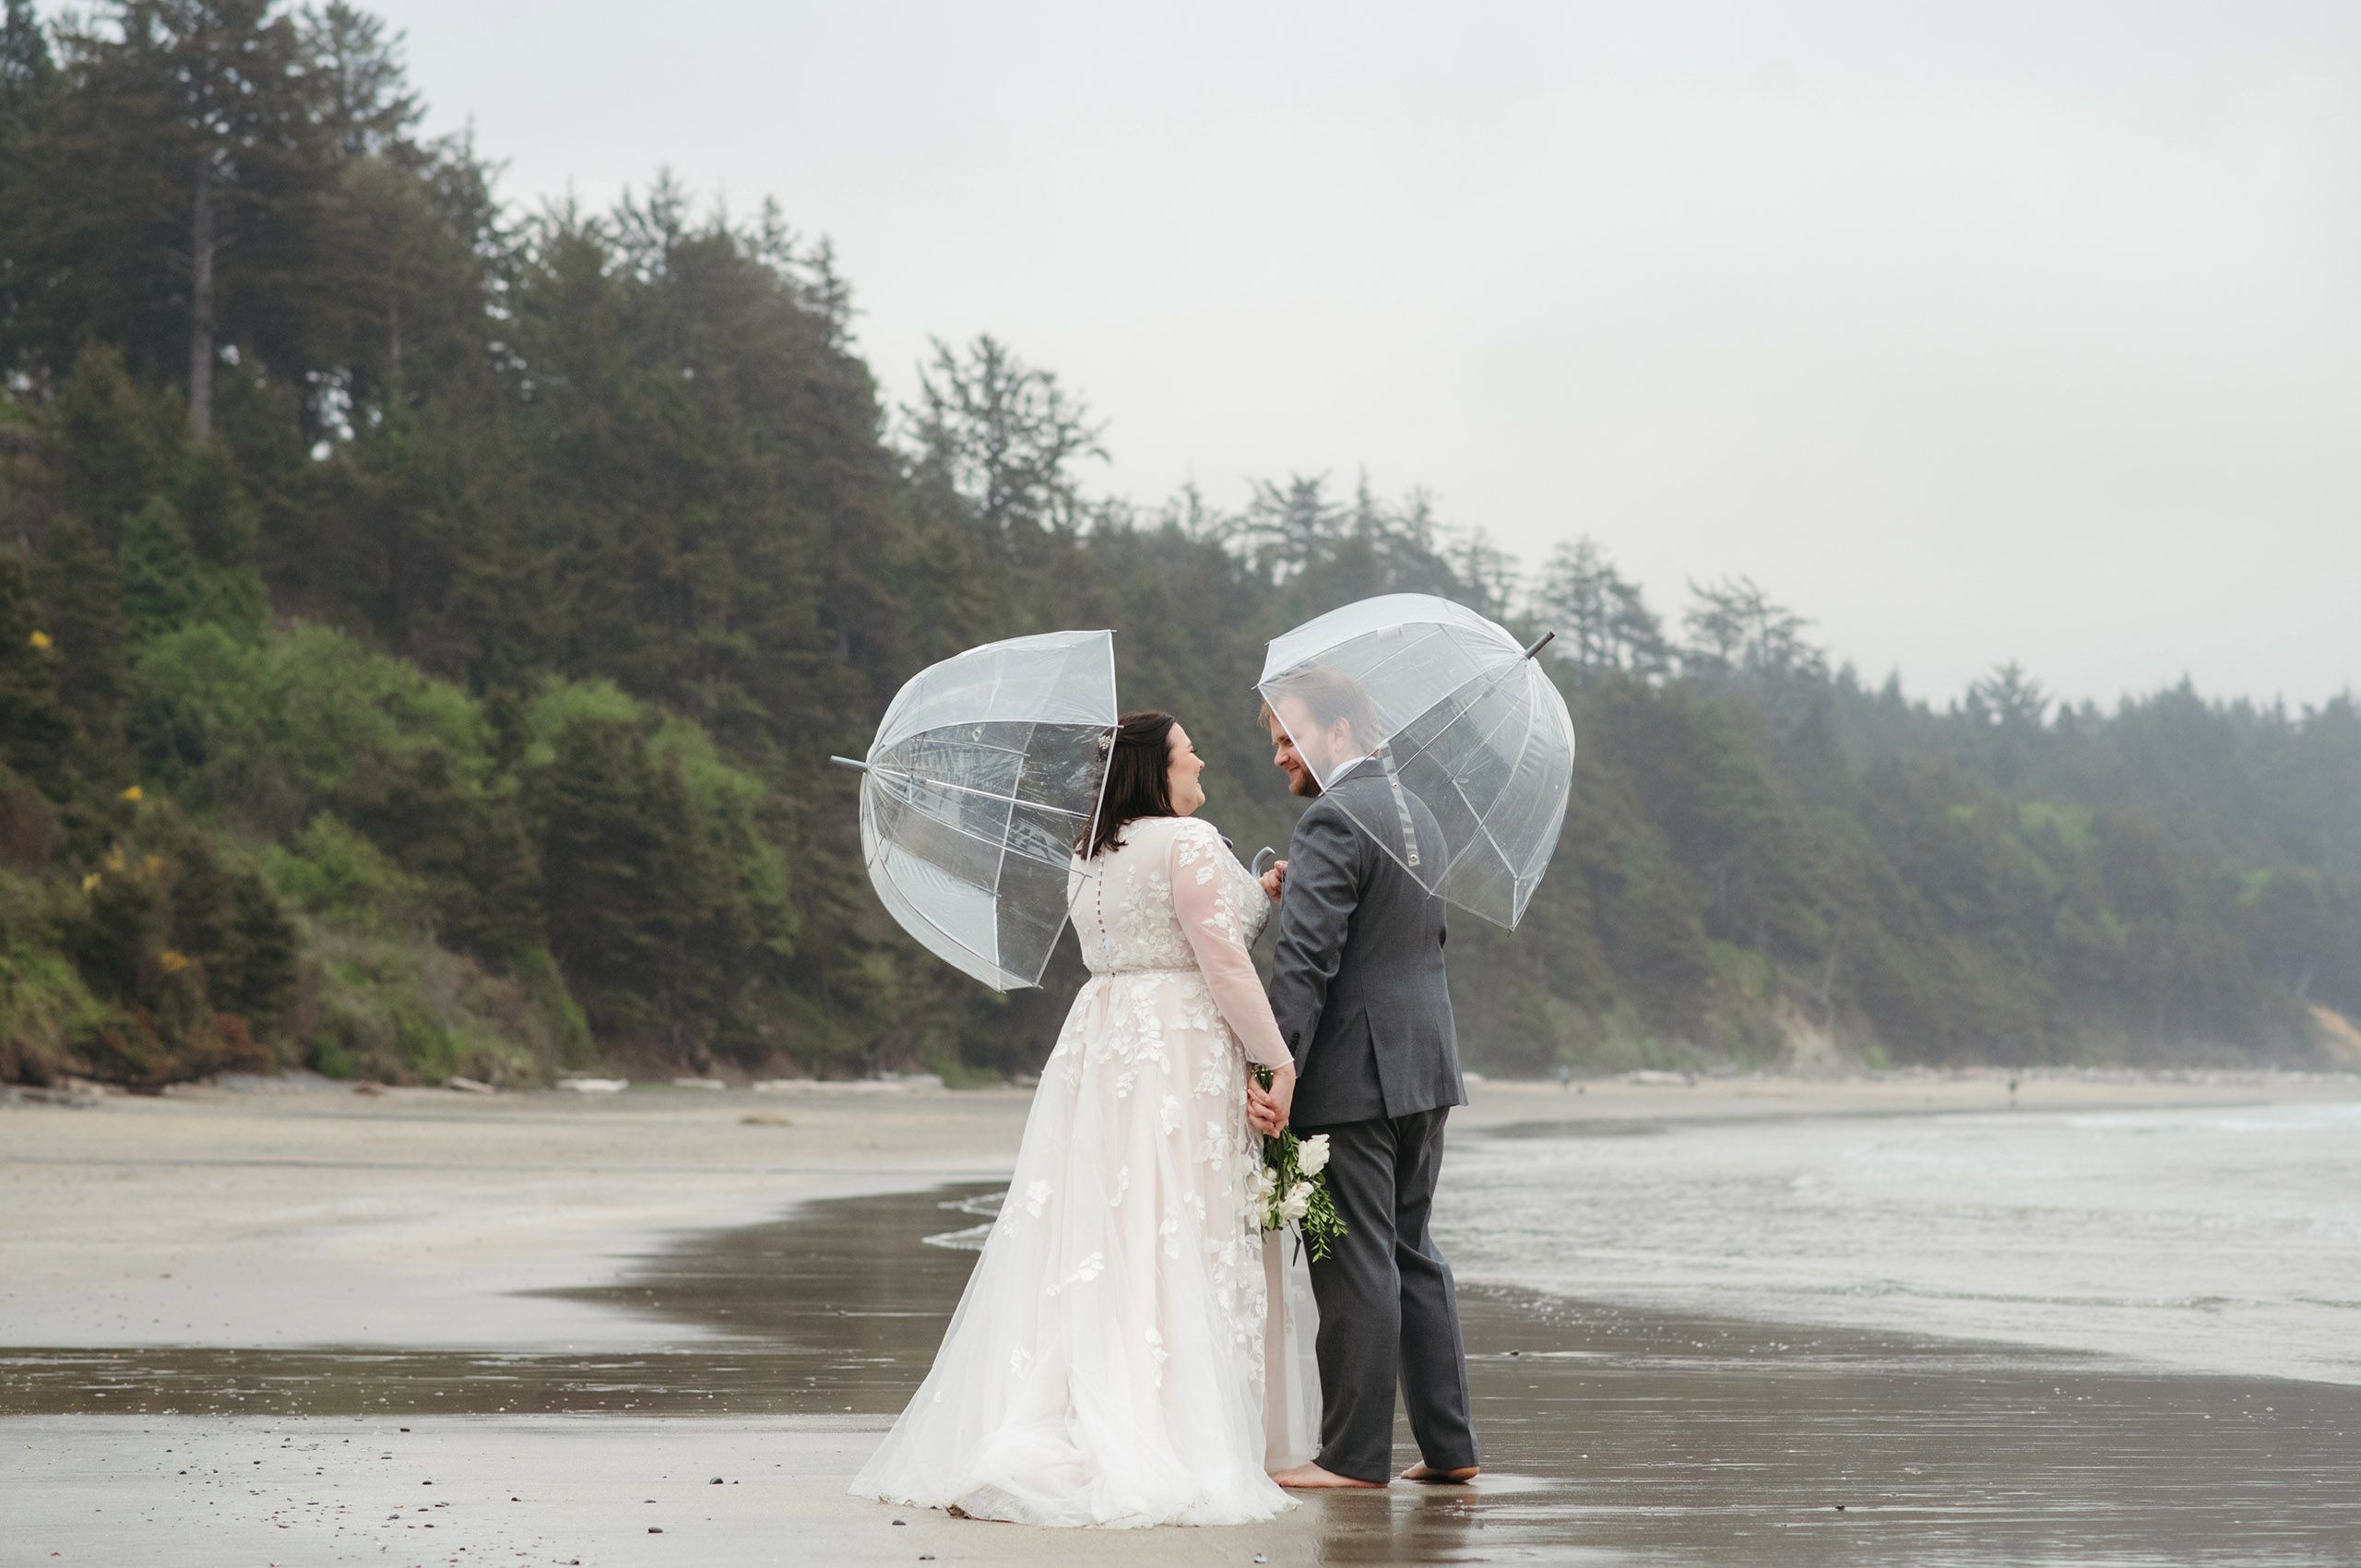 Rainy day wedding portraits at the beach